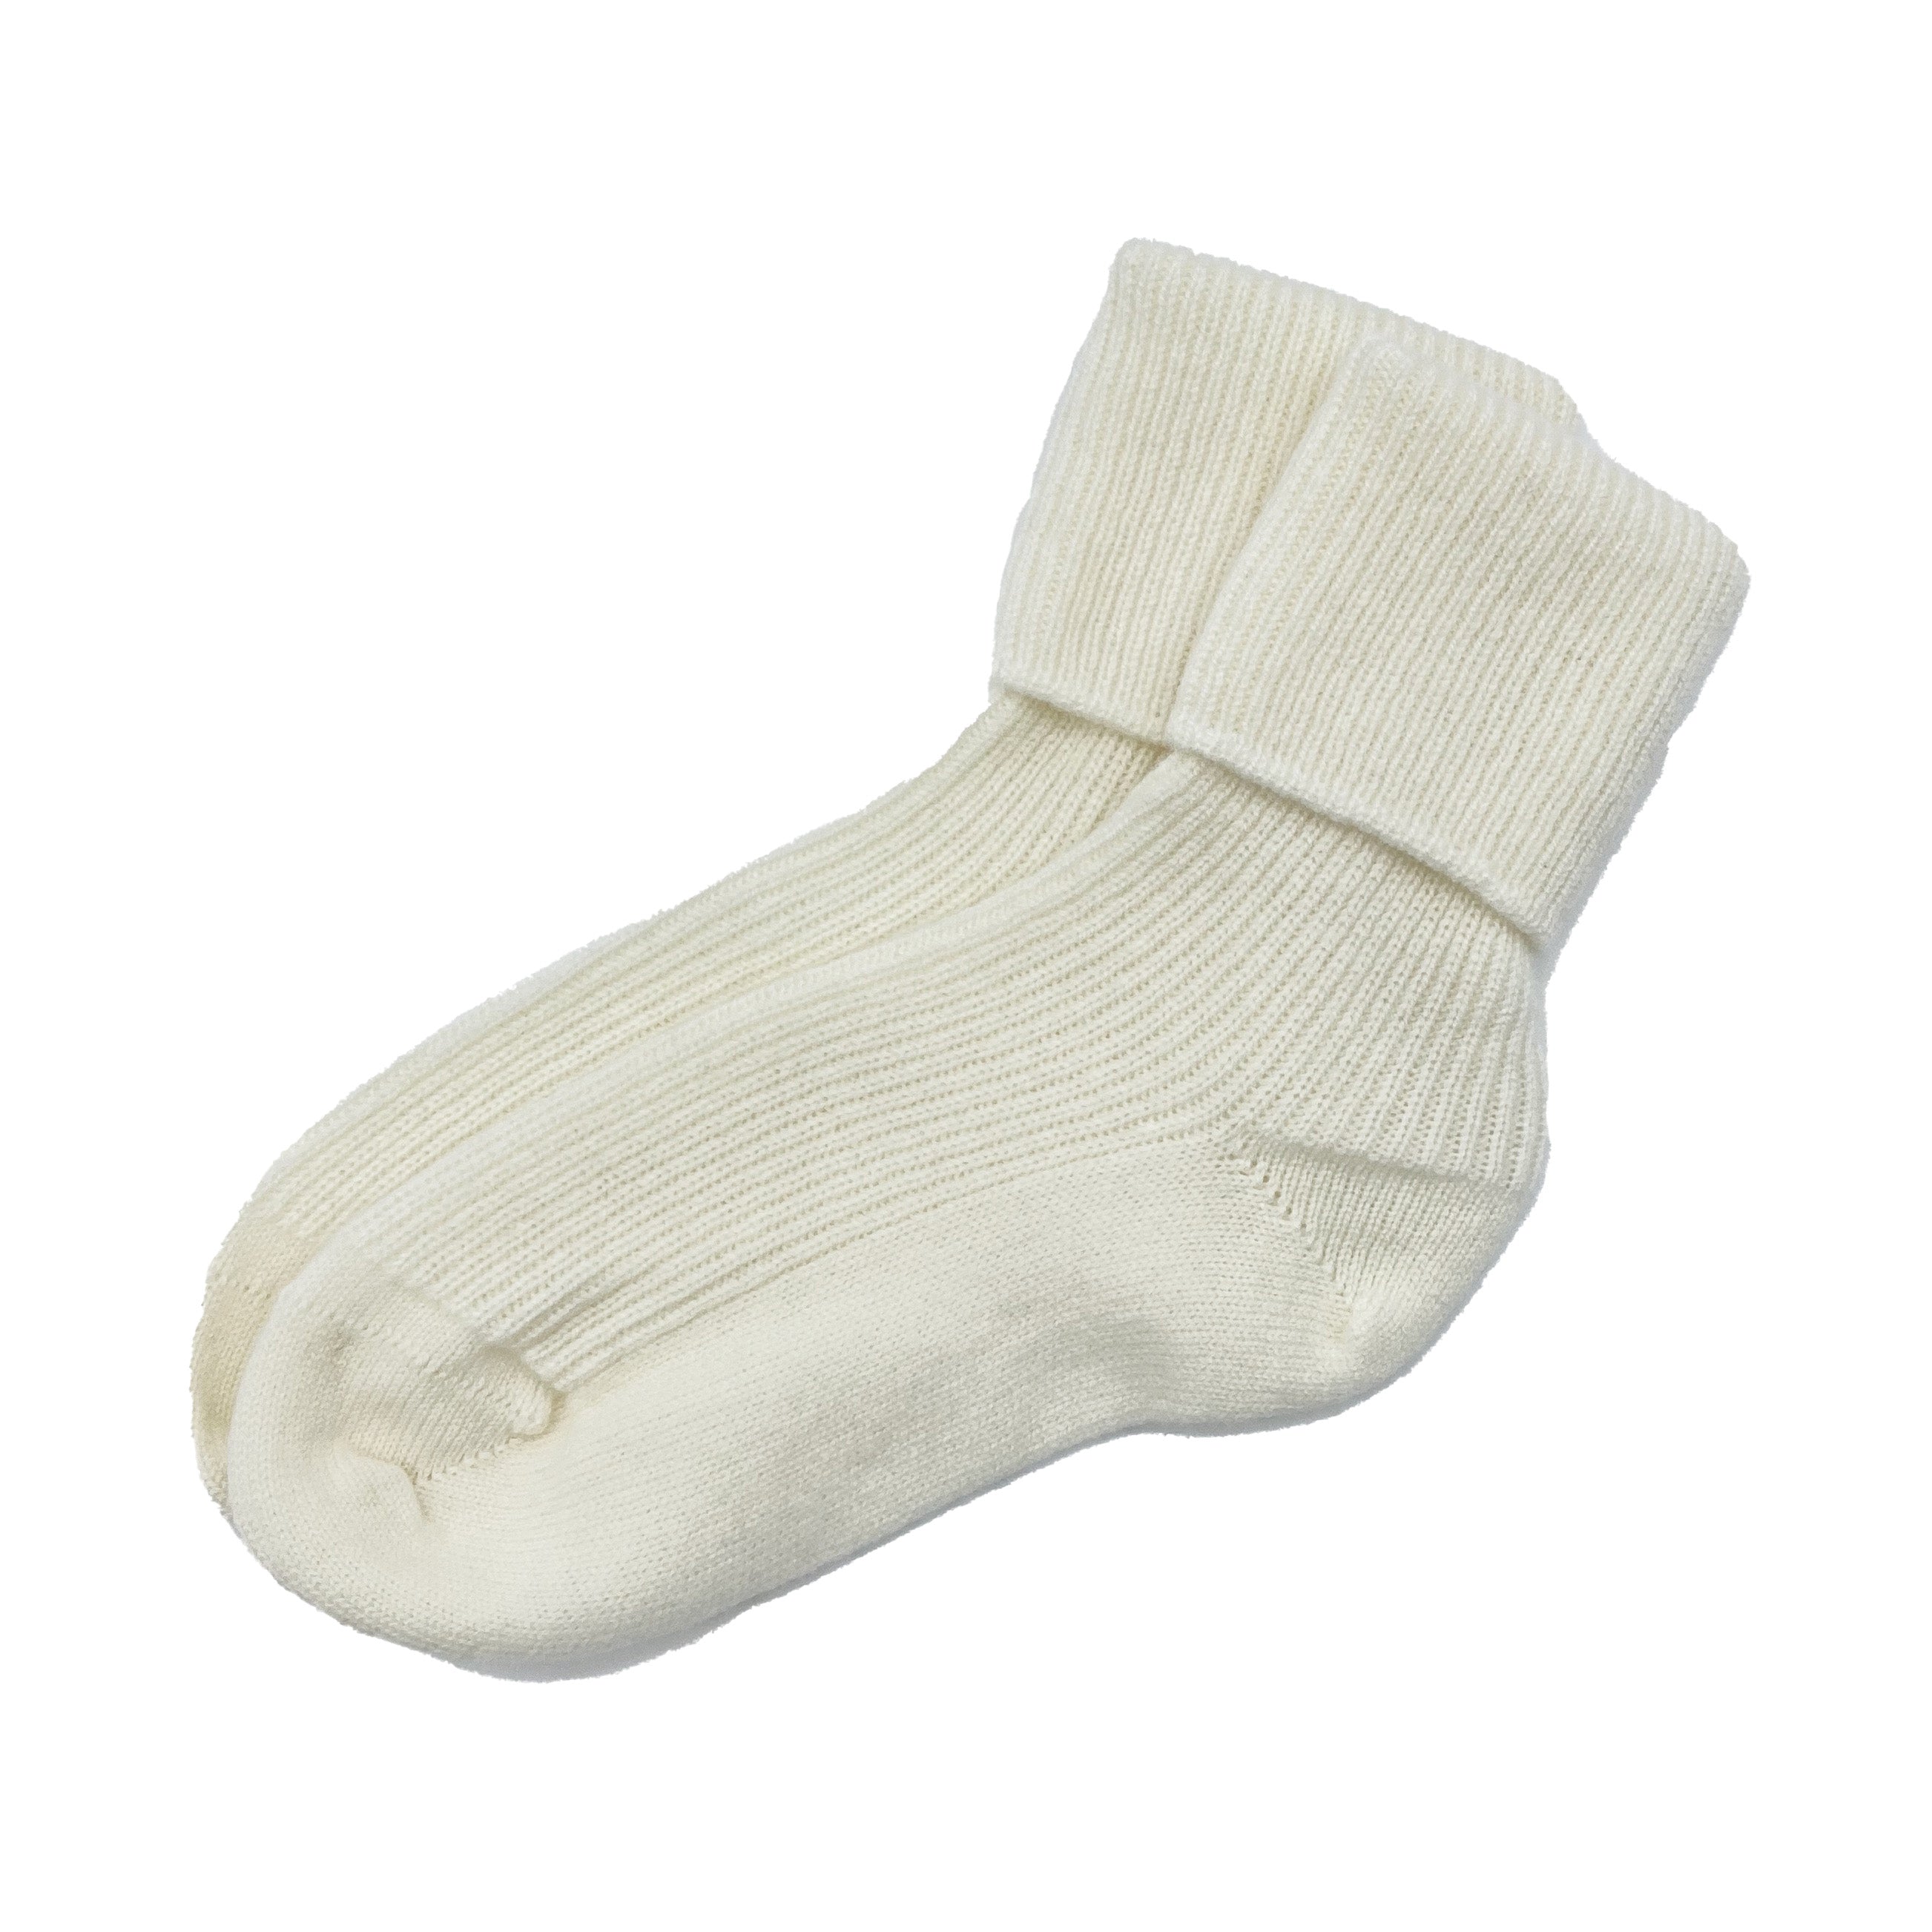 Luxury Pure Cashmere Bed Socks | Cream Bed Socks | Ava Innes